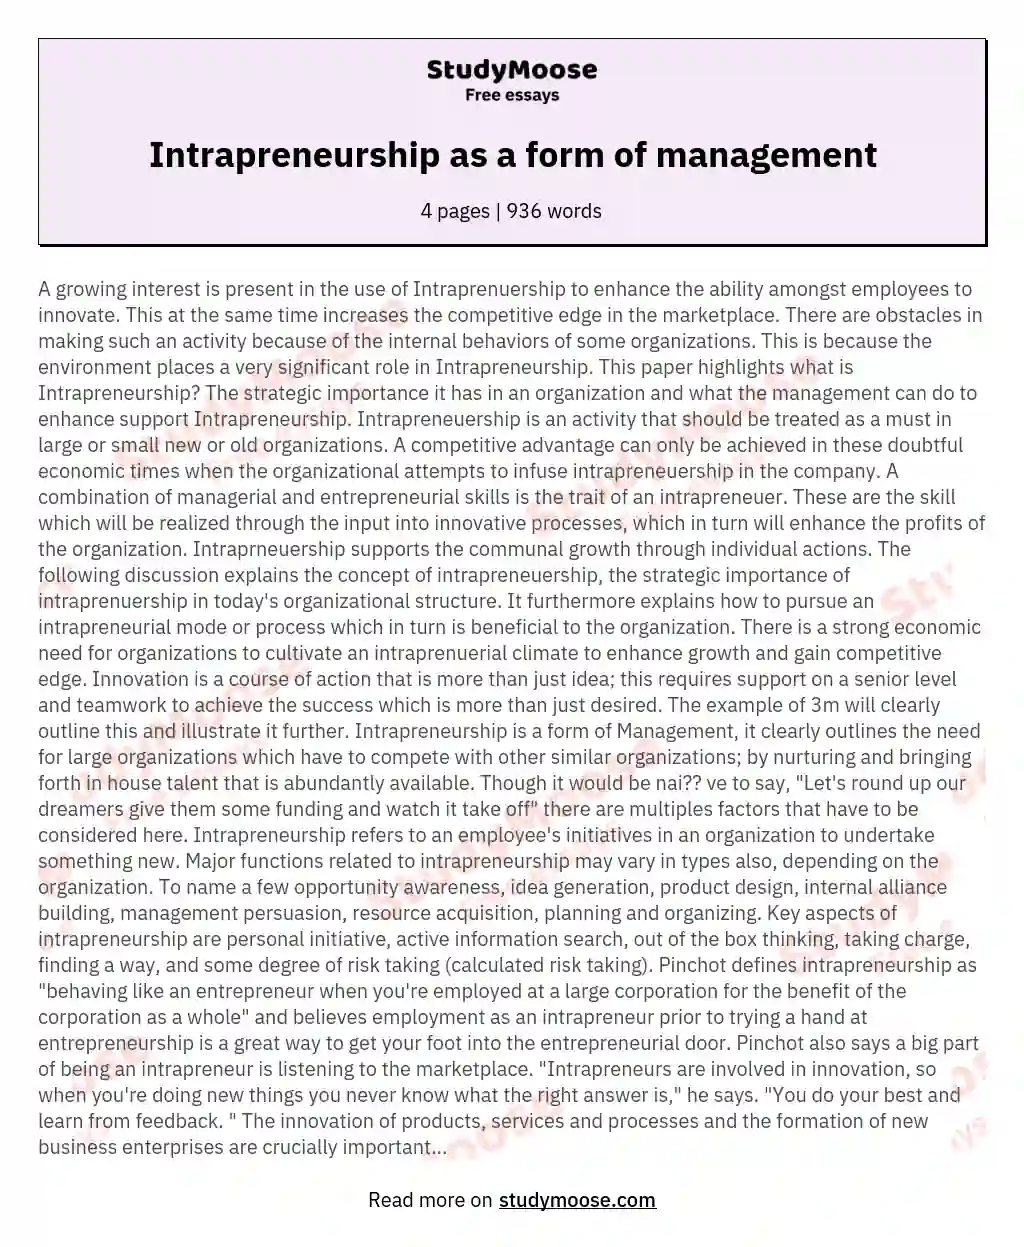 Intrapreneurship as a form of management essay